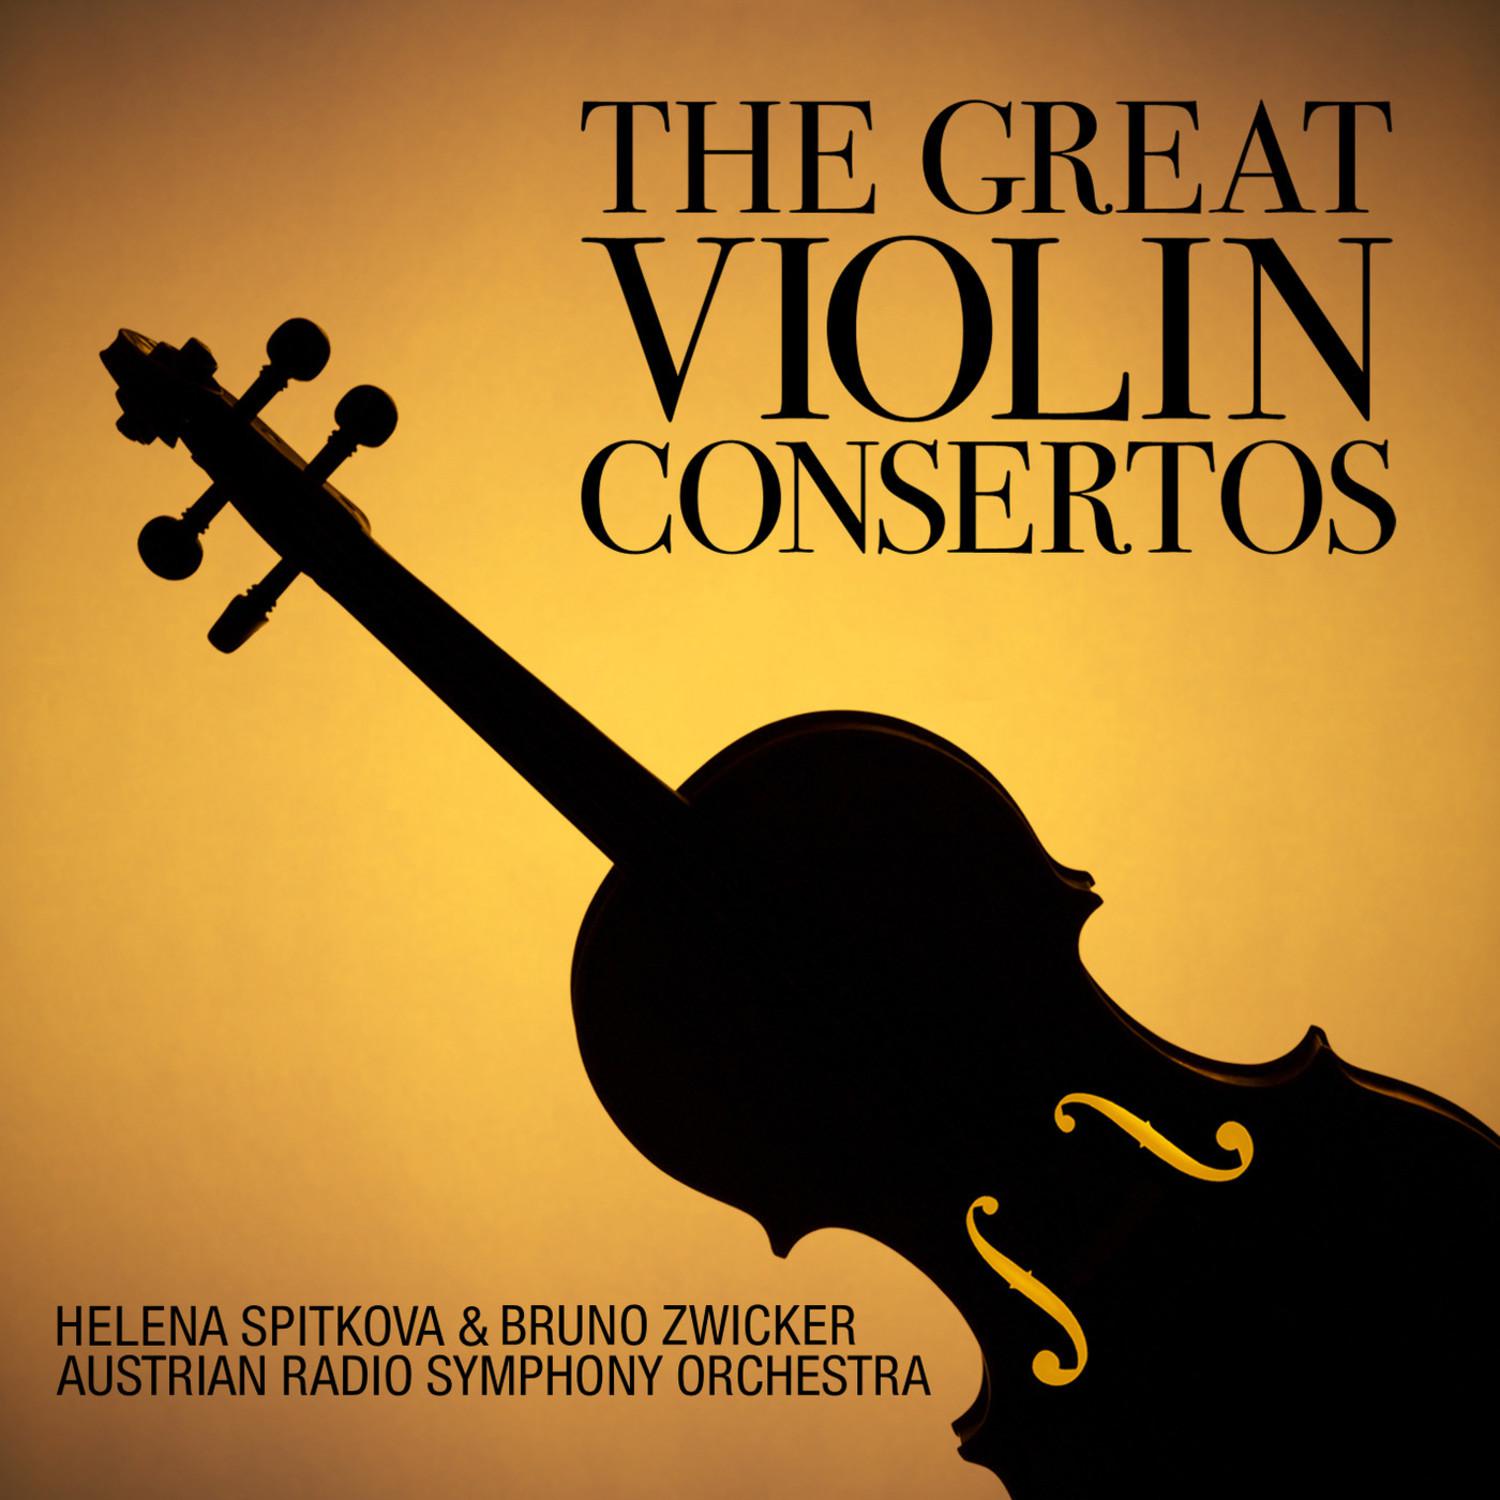 Concerto No. 1 in G Minor for Violin and Orchestra, Op. 26: III. Finale: Allegro energico